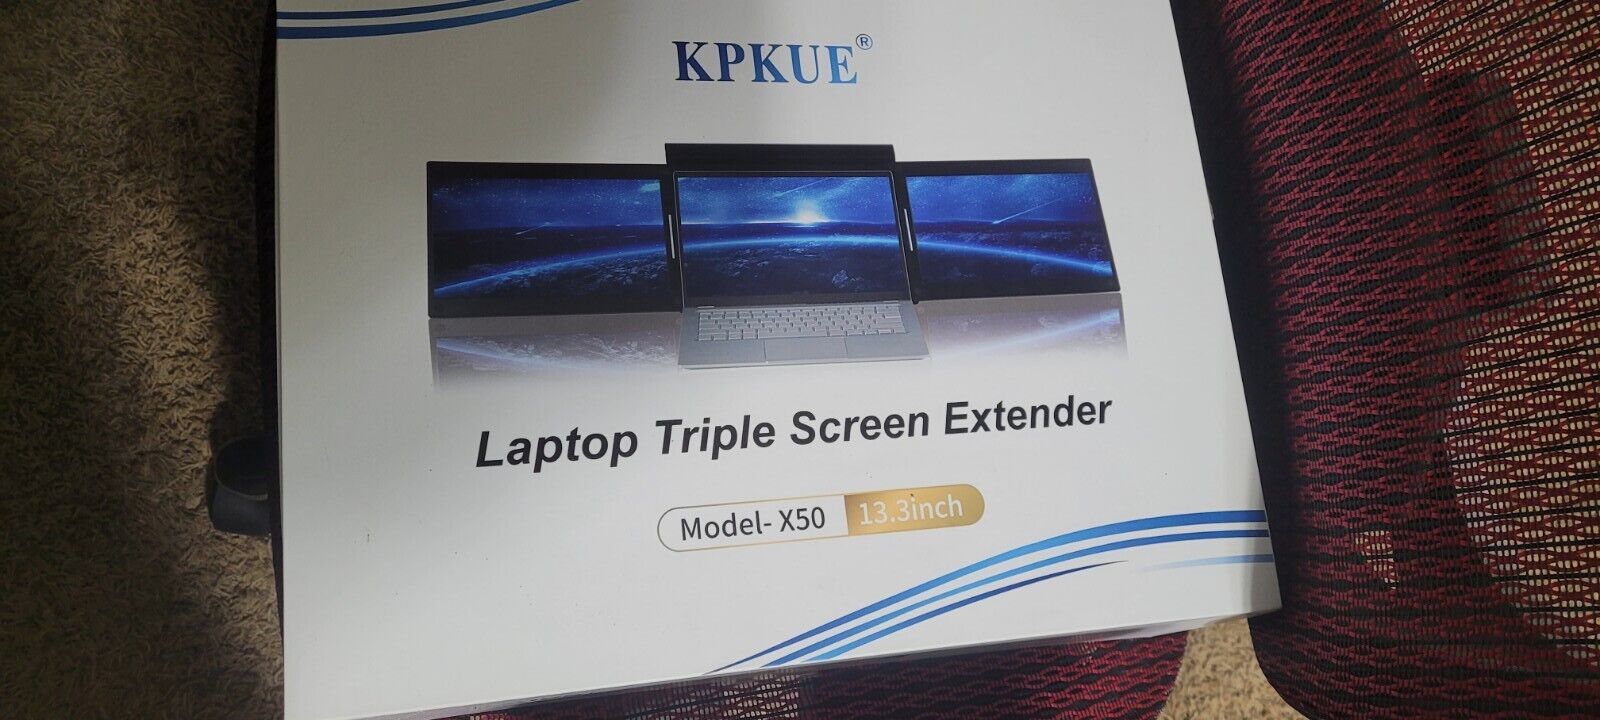 Kpkue laptop triple screen extender model- X50 